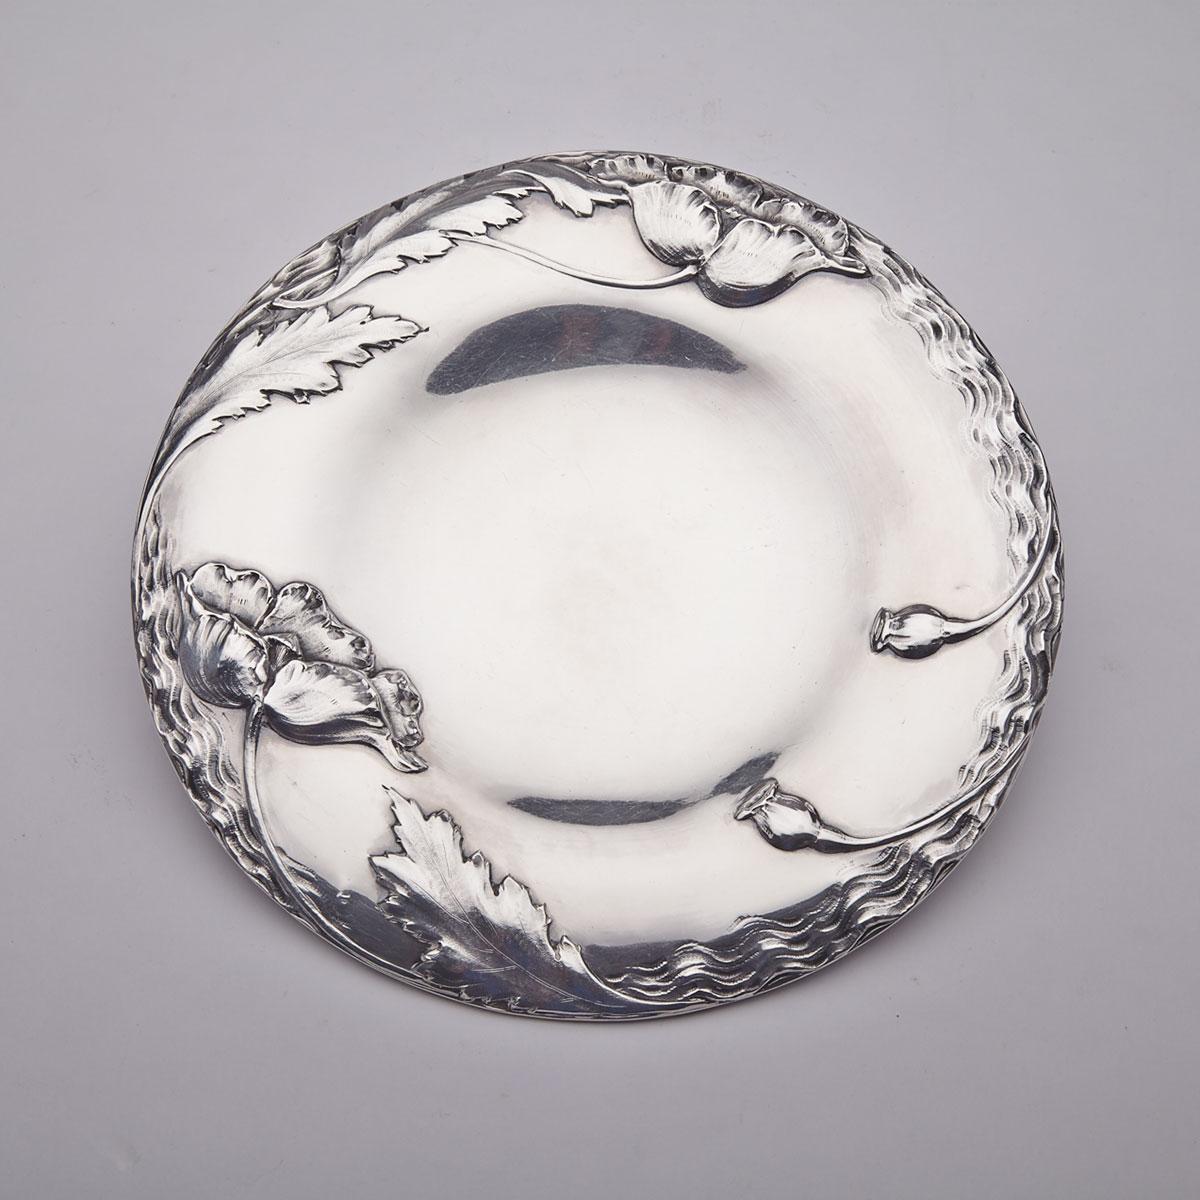 French Art Nouveau Silver Circular Dish, Henri Lapeyre, Paris, c.1900